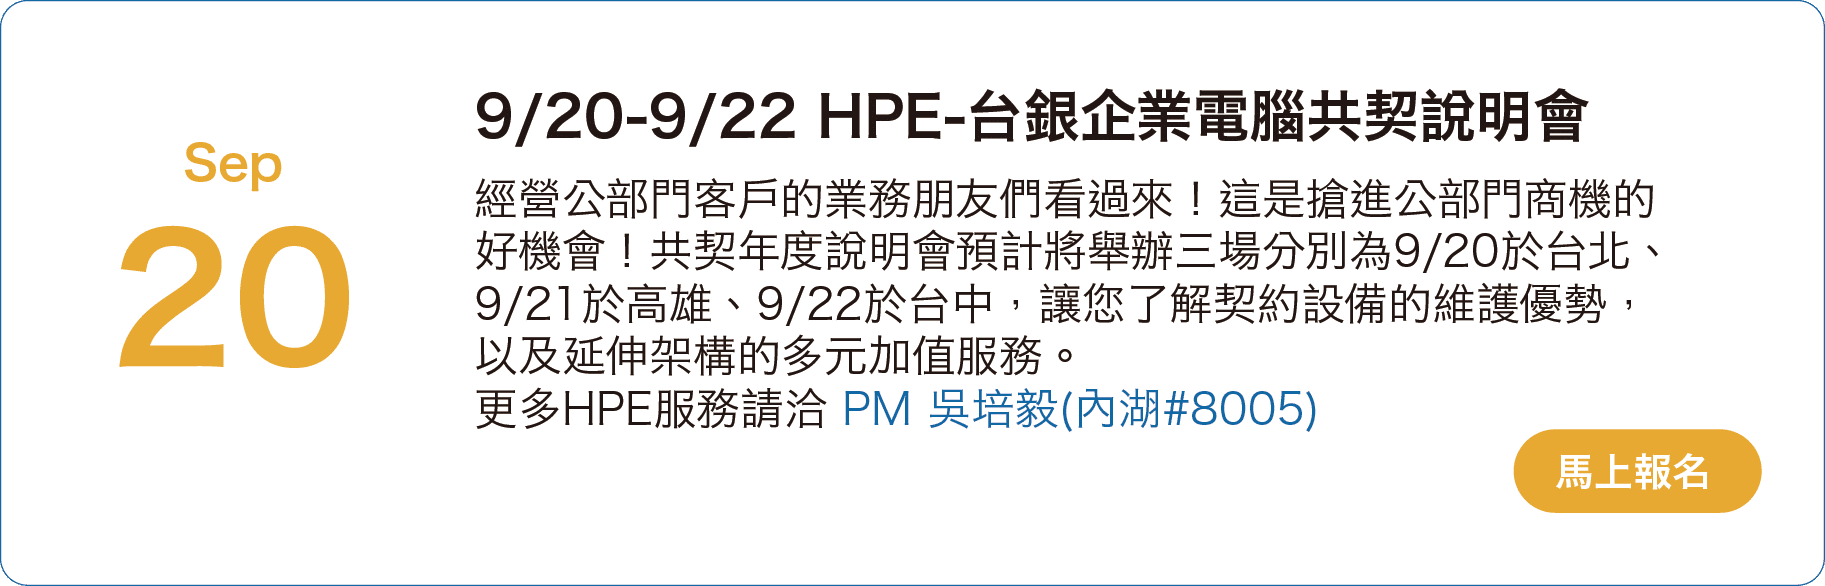 HPE-台銀企業電腦共契說明會